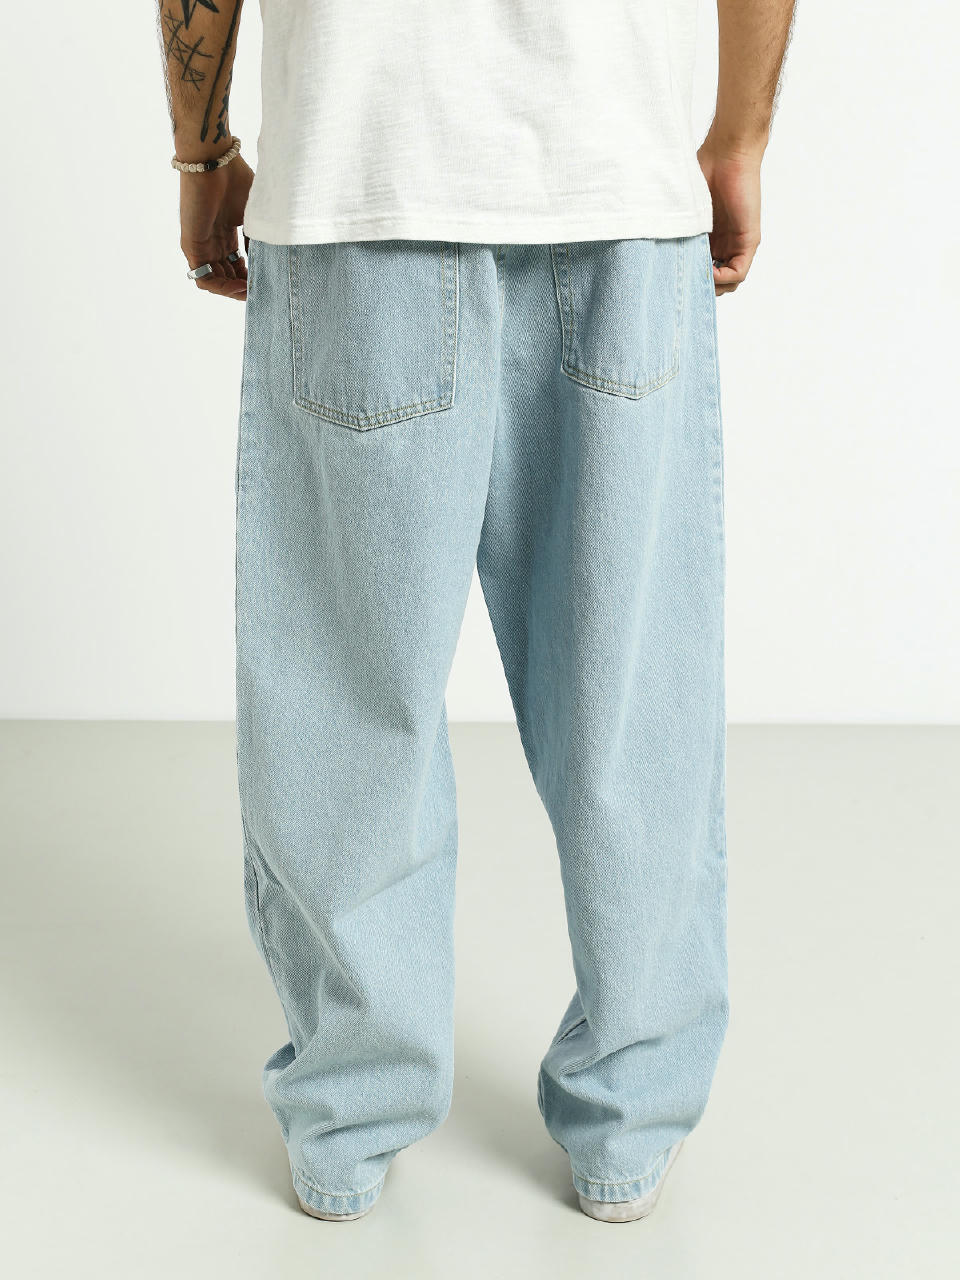 Polar Skate Big Boy Jeans Pants (bleach blue)